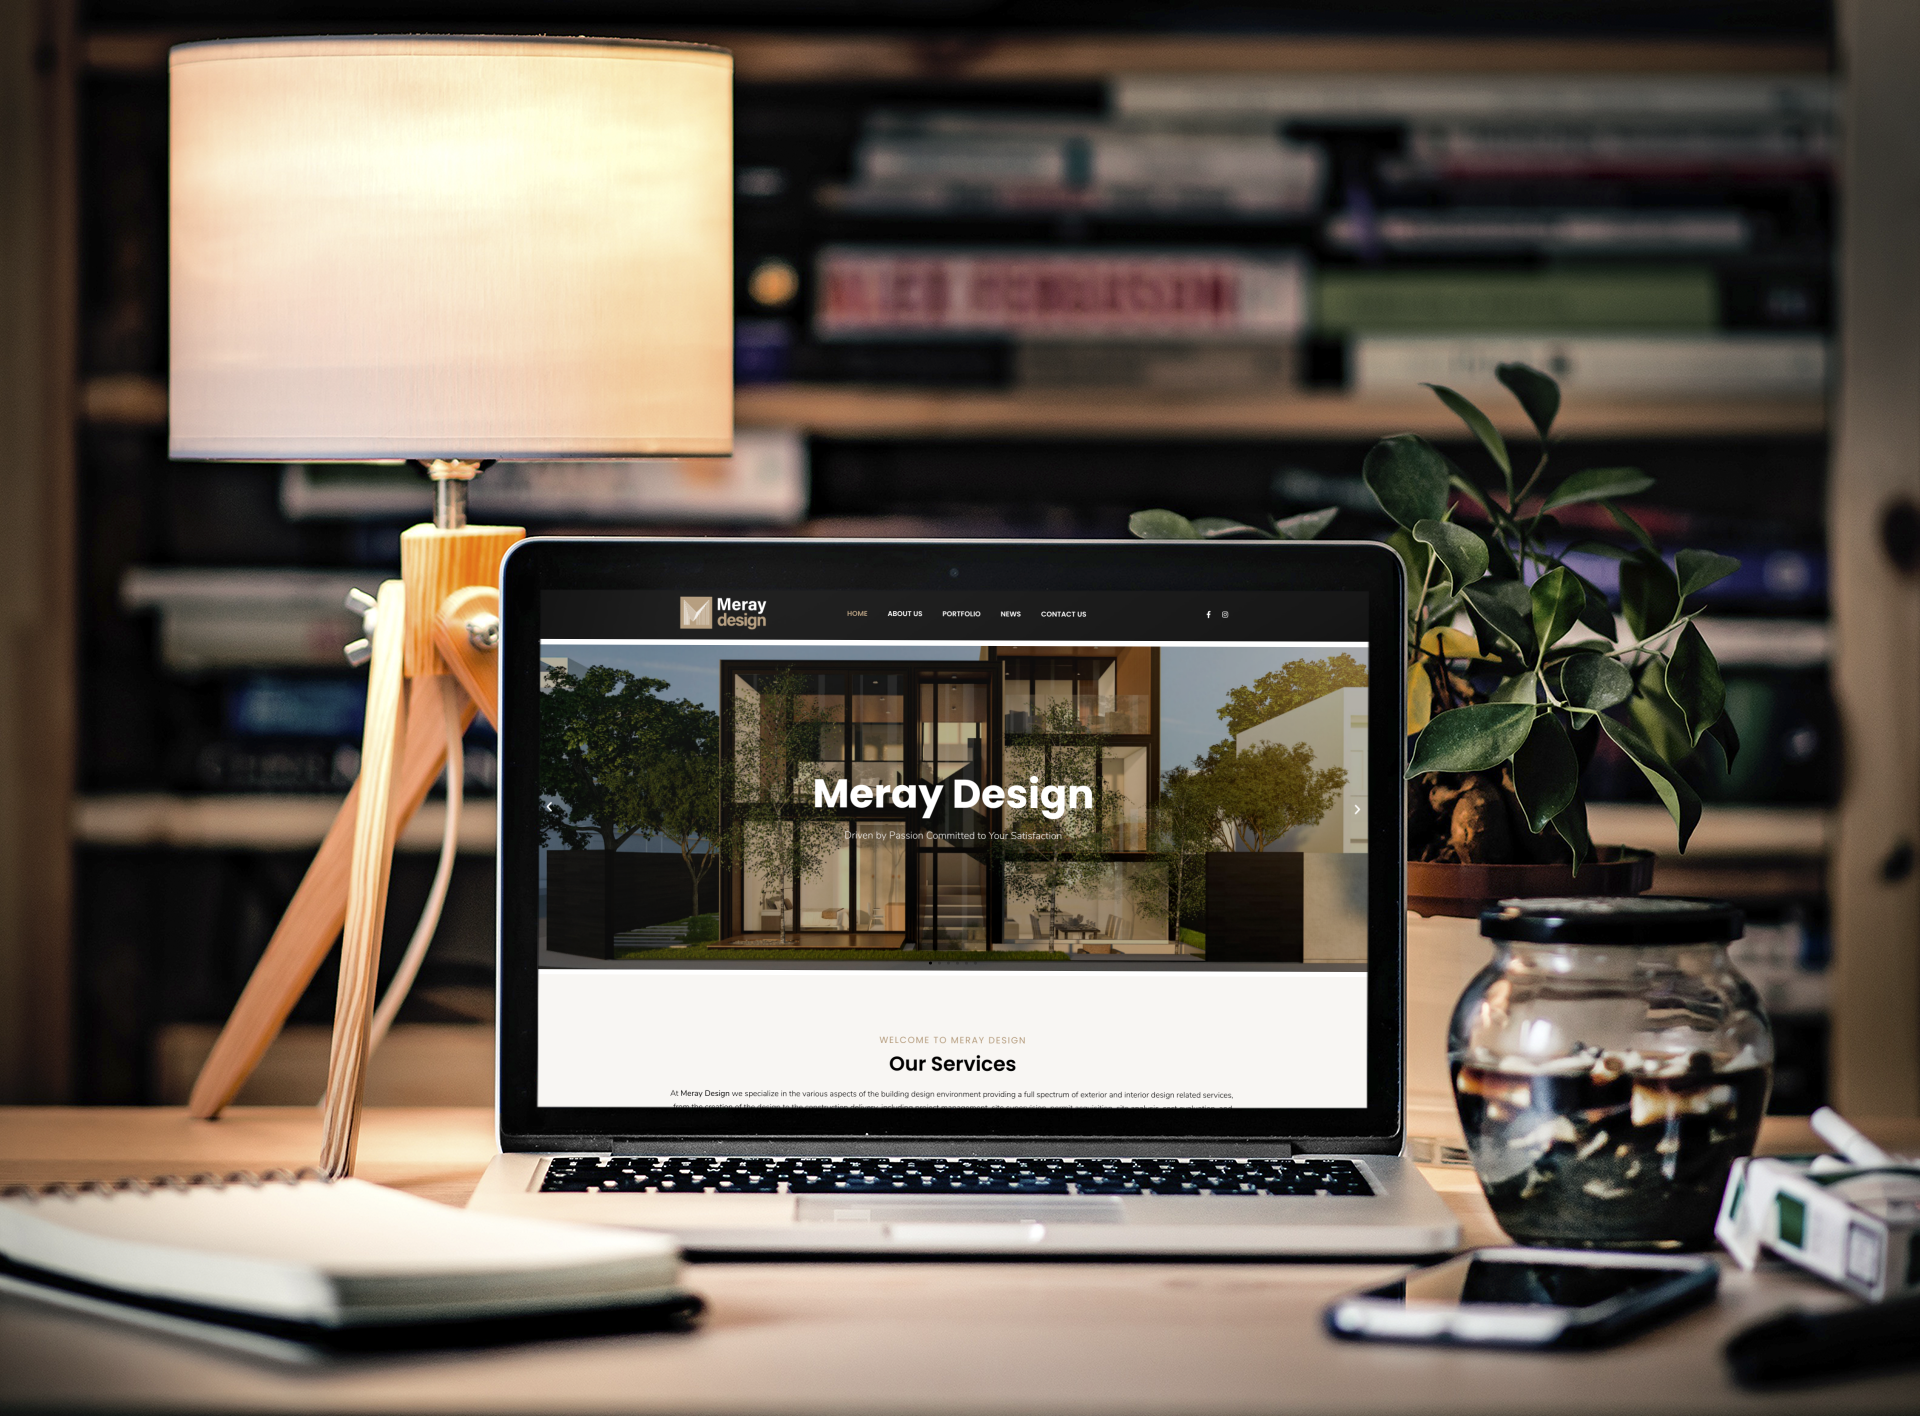 Meray Design website designed by Knobin Digital